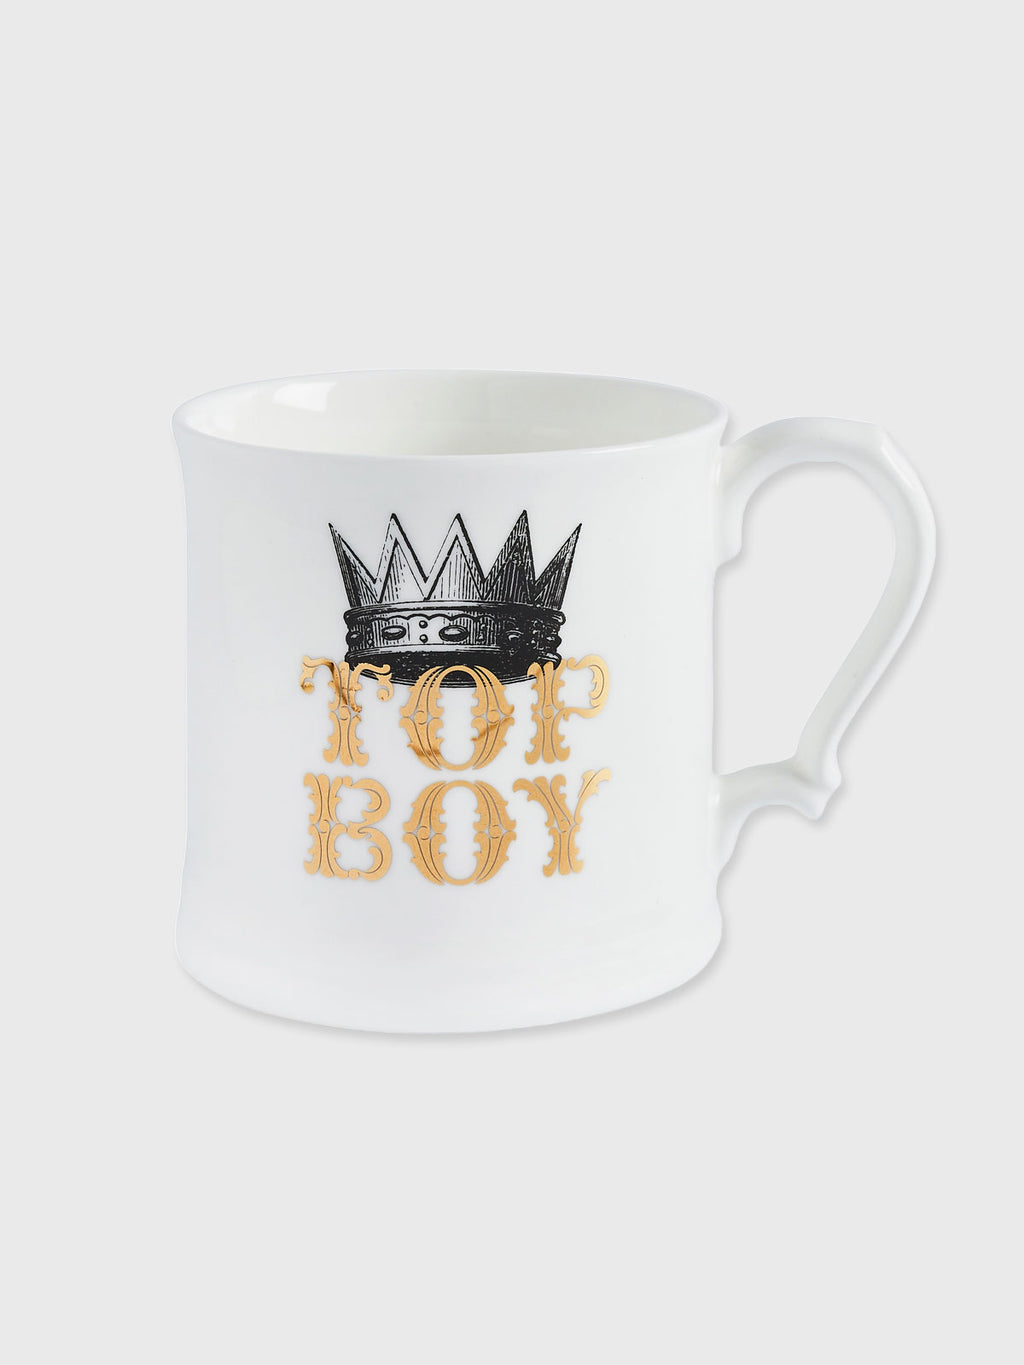 Cheeky Mare - Top Boy Mug - 18ct Gold